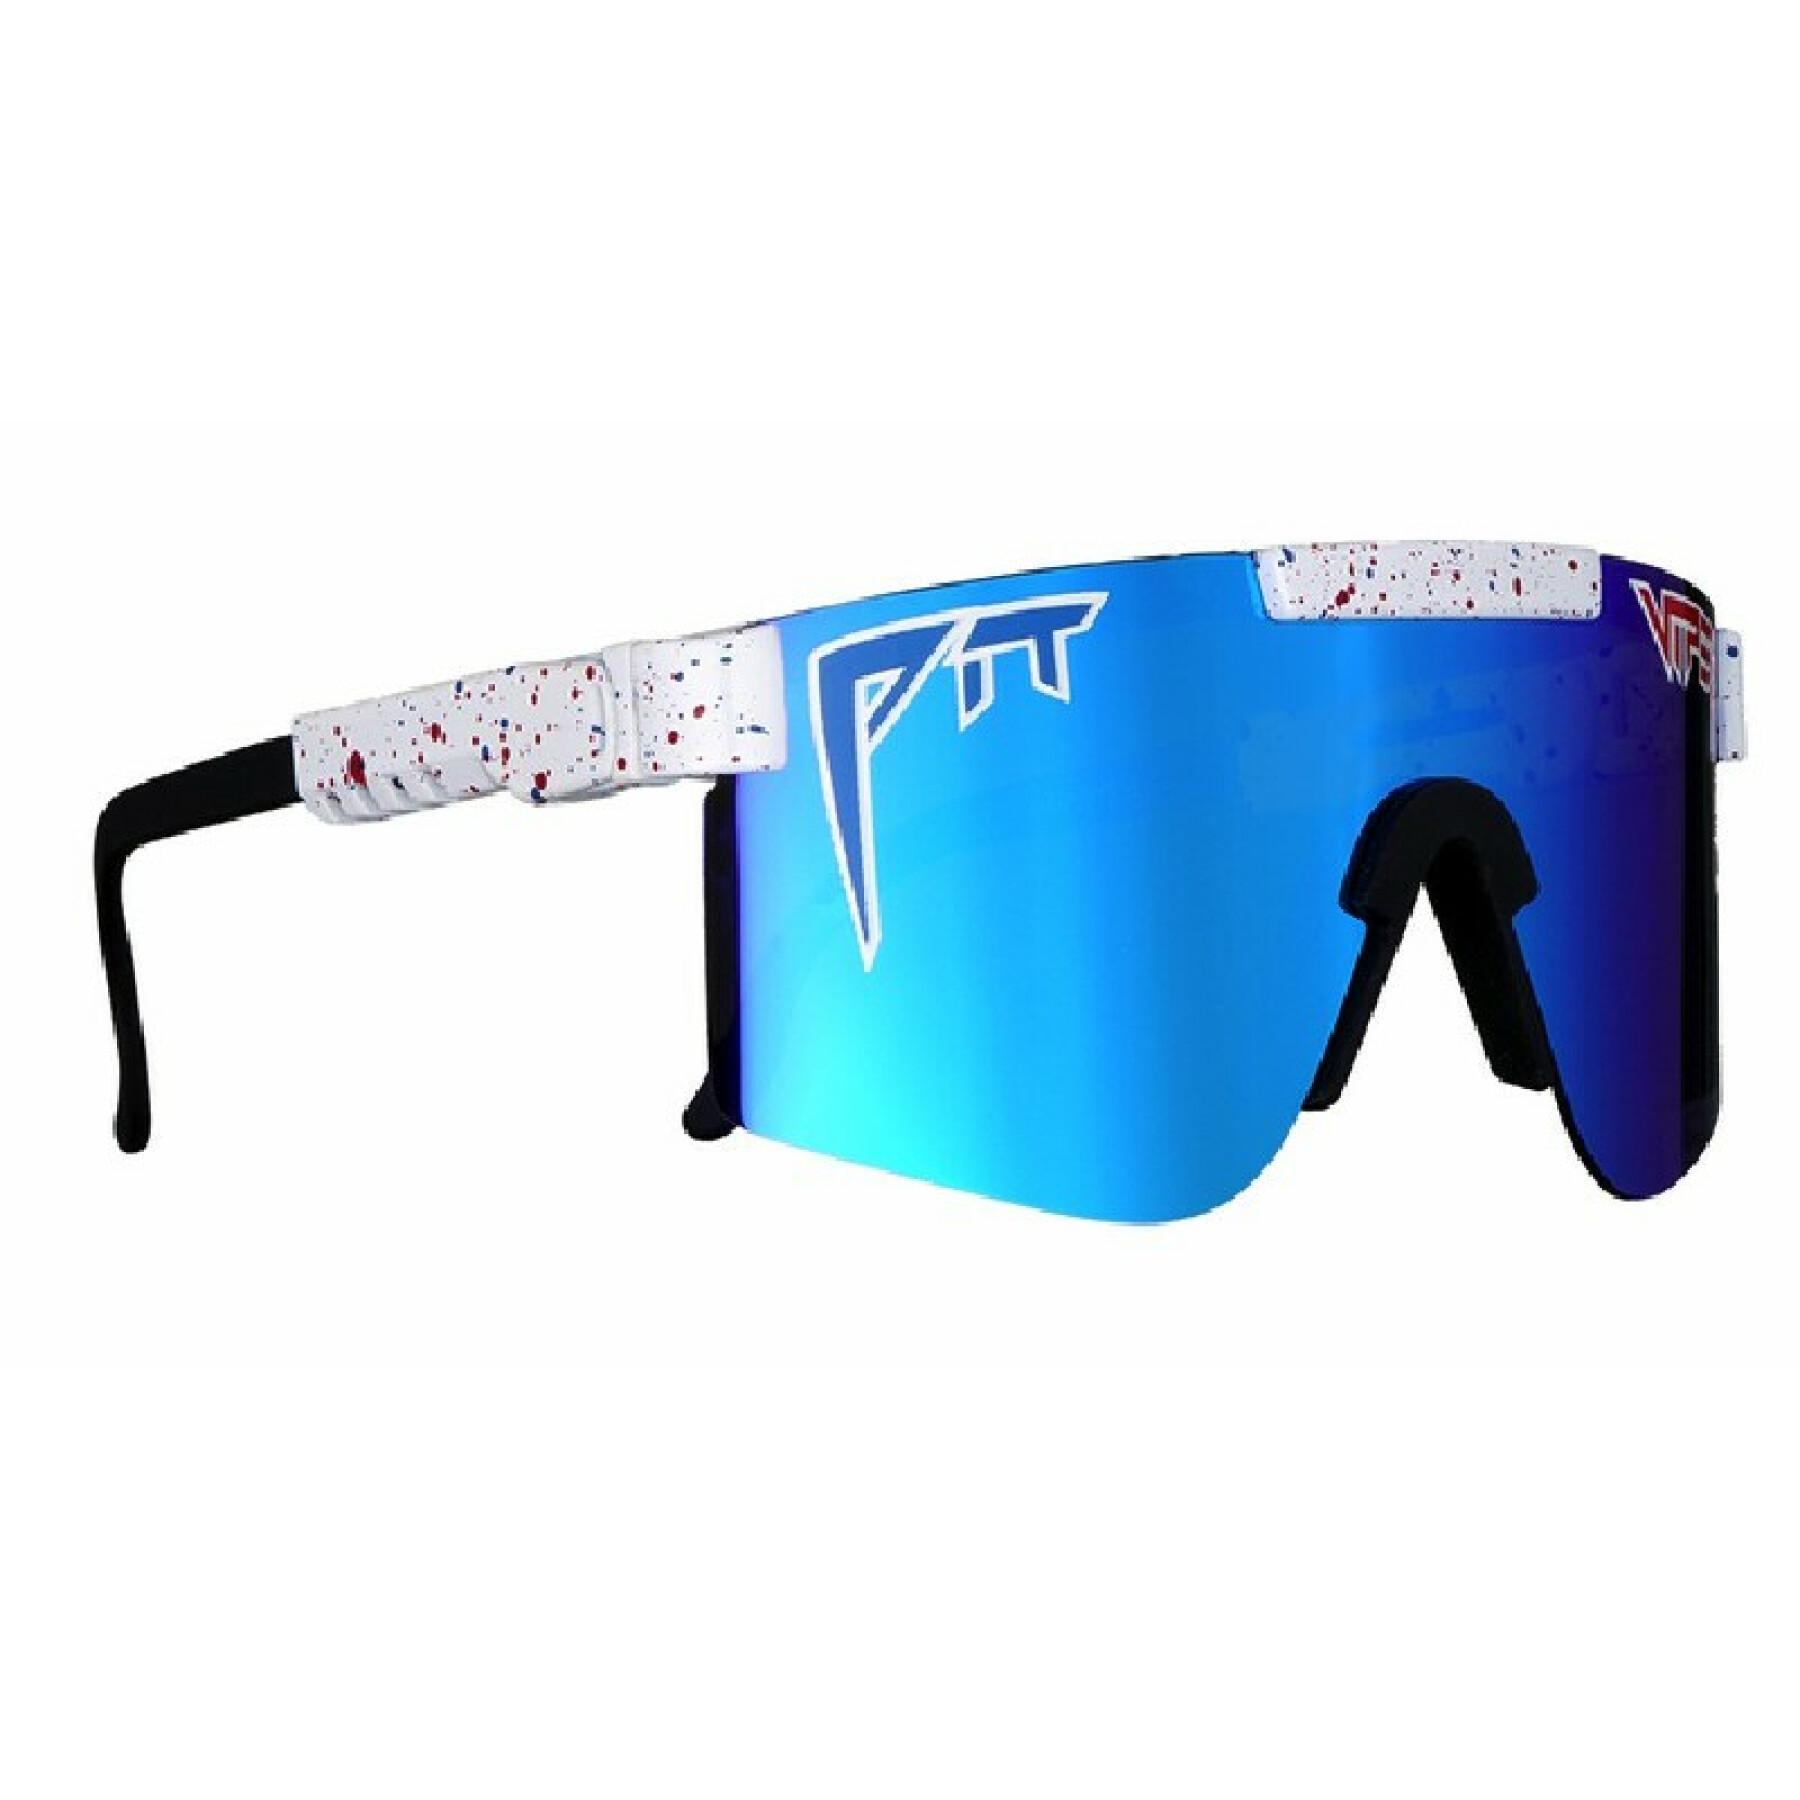 Original polarized sunglasses Pit Viper The Absolute Freedom